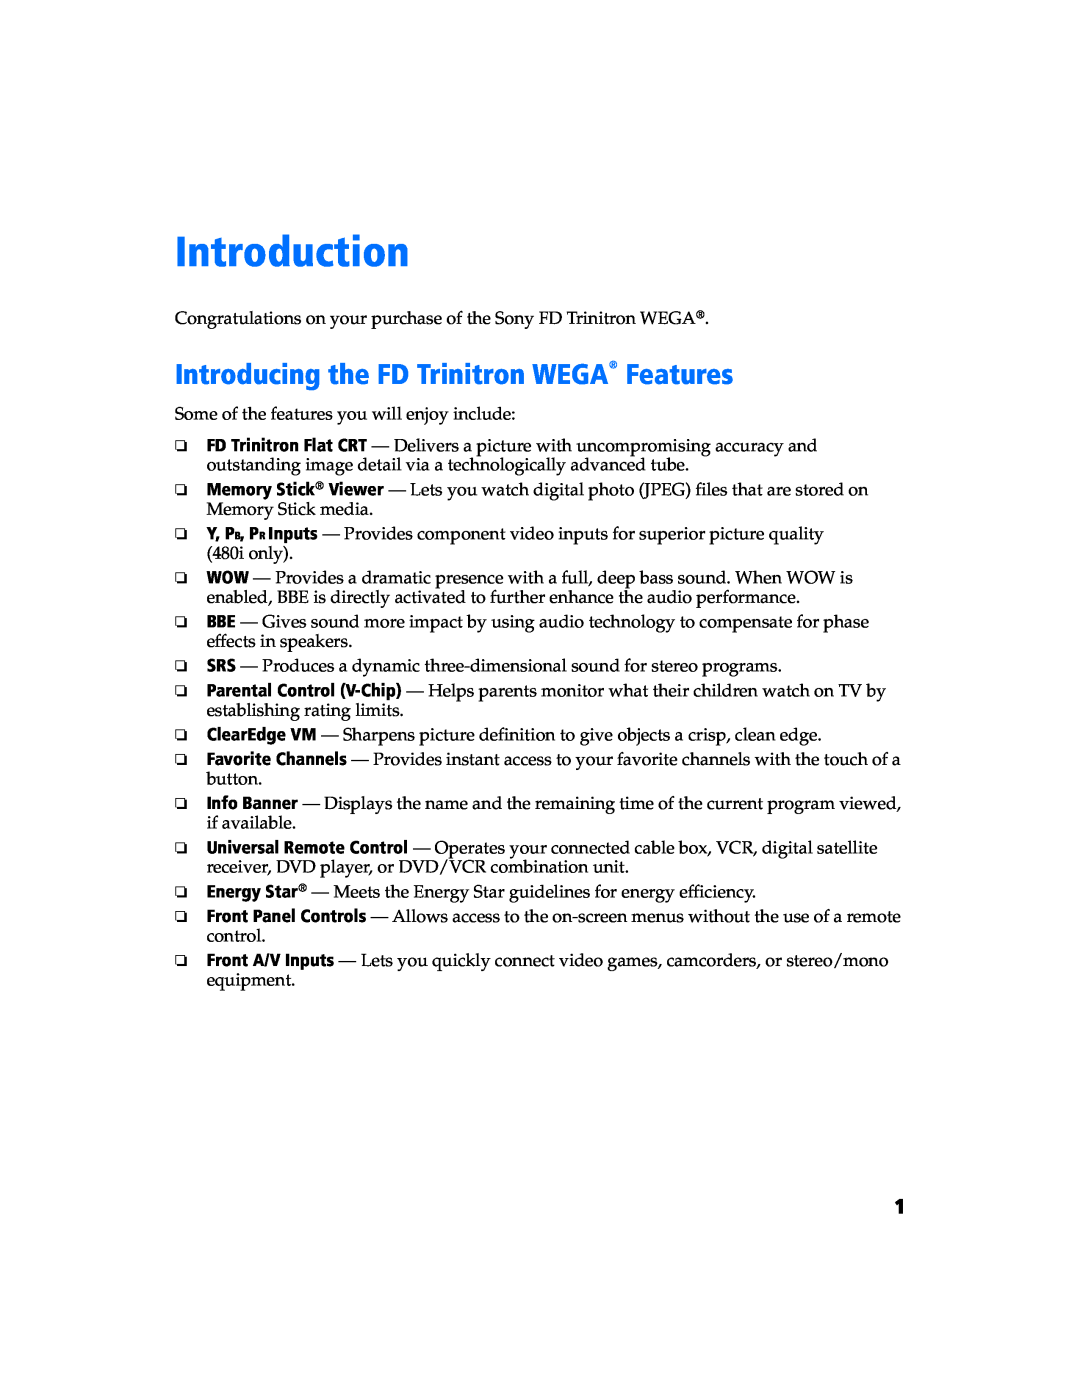 Sony KV 27FS320 manual Introduction, Introducing the FD Trinitron WEGA Features 